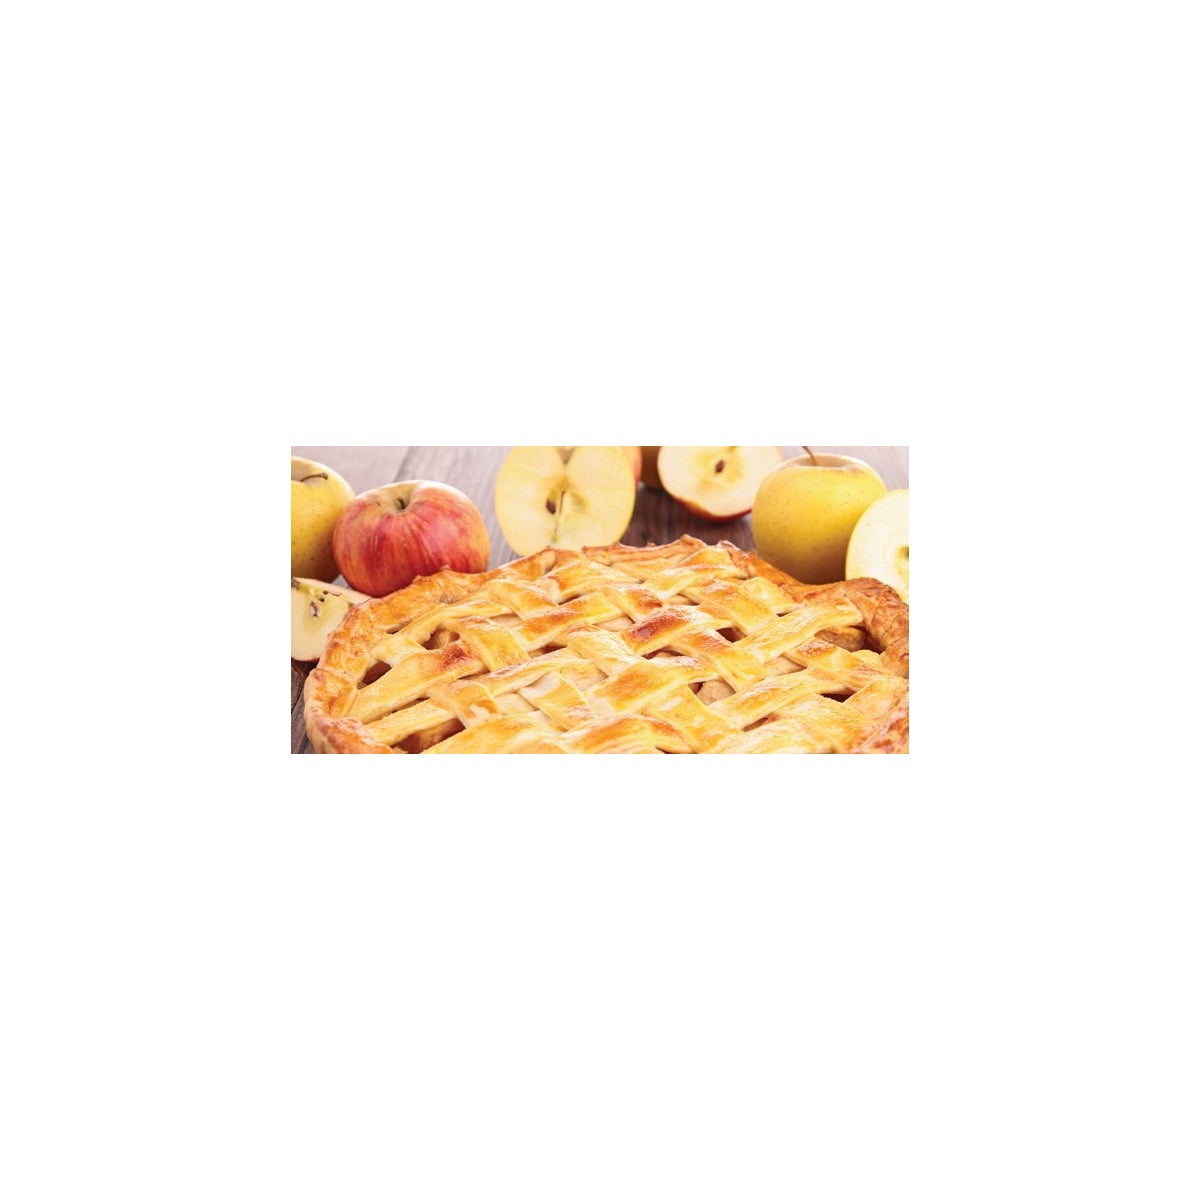 Classic Wax Melts 2.5 oz - Hot Apple Pie